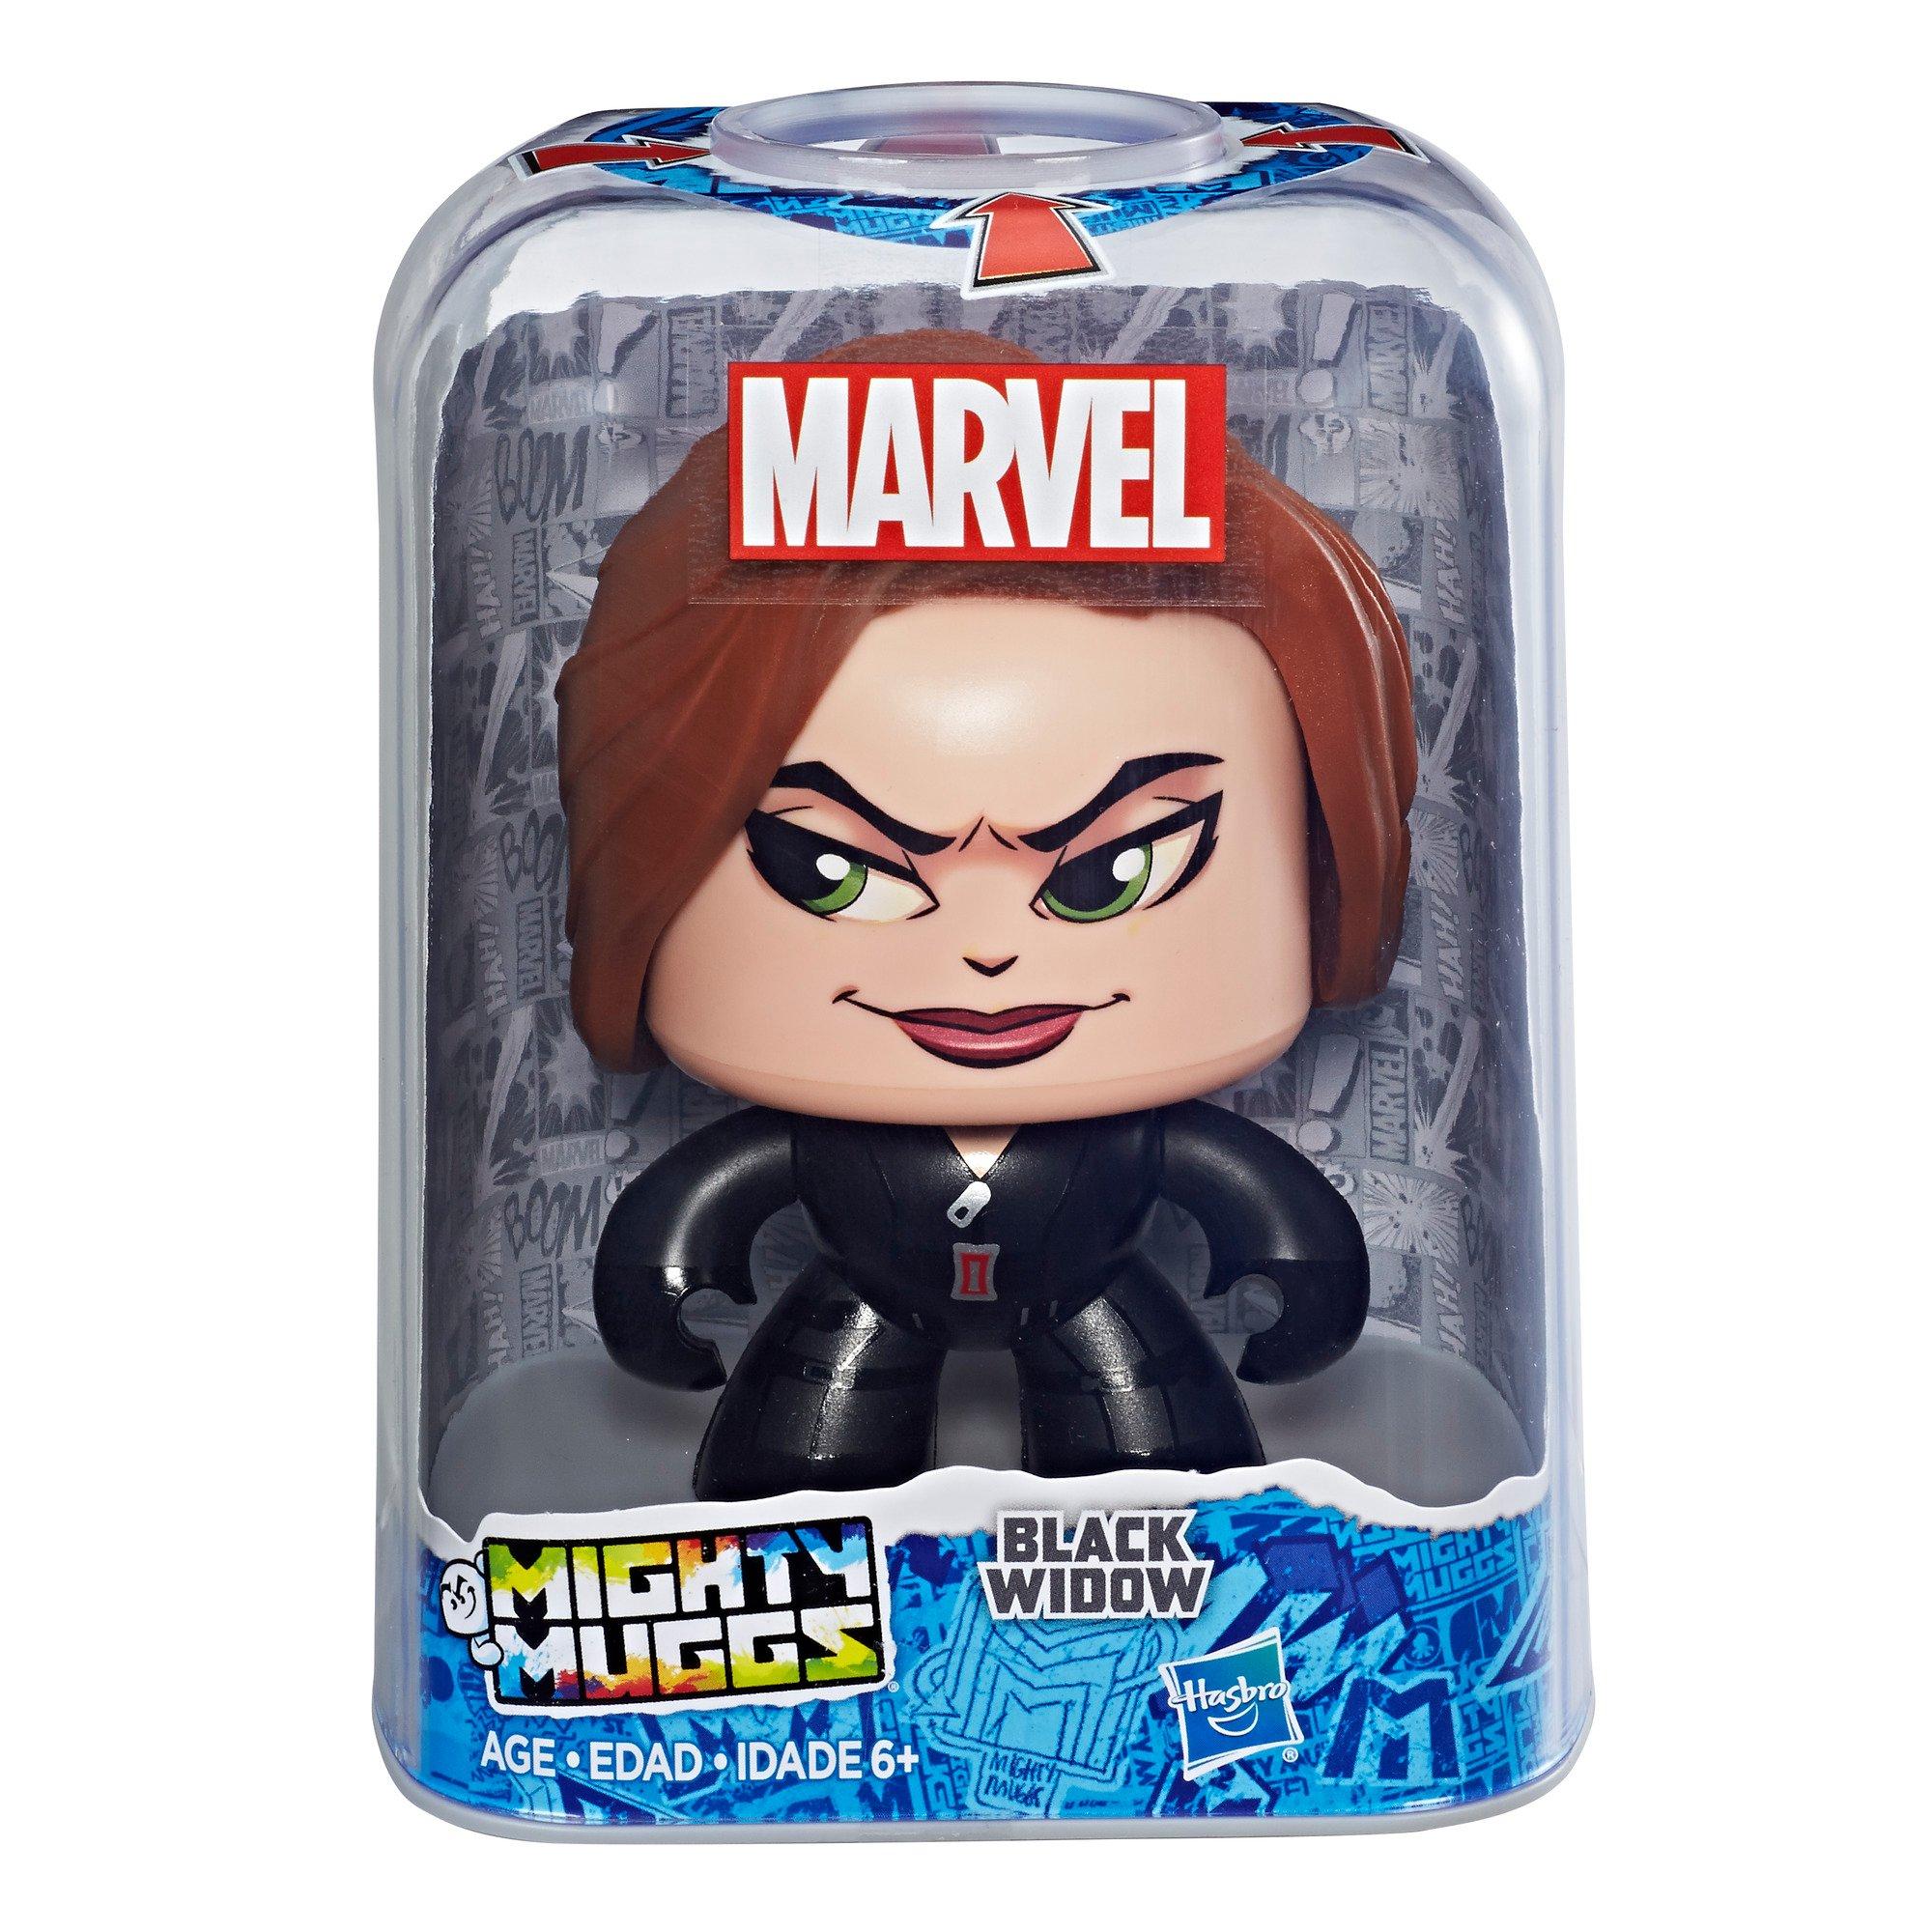 Marvel Mighty Muggs Black Widow